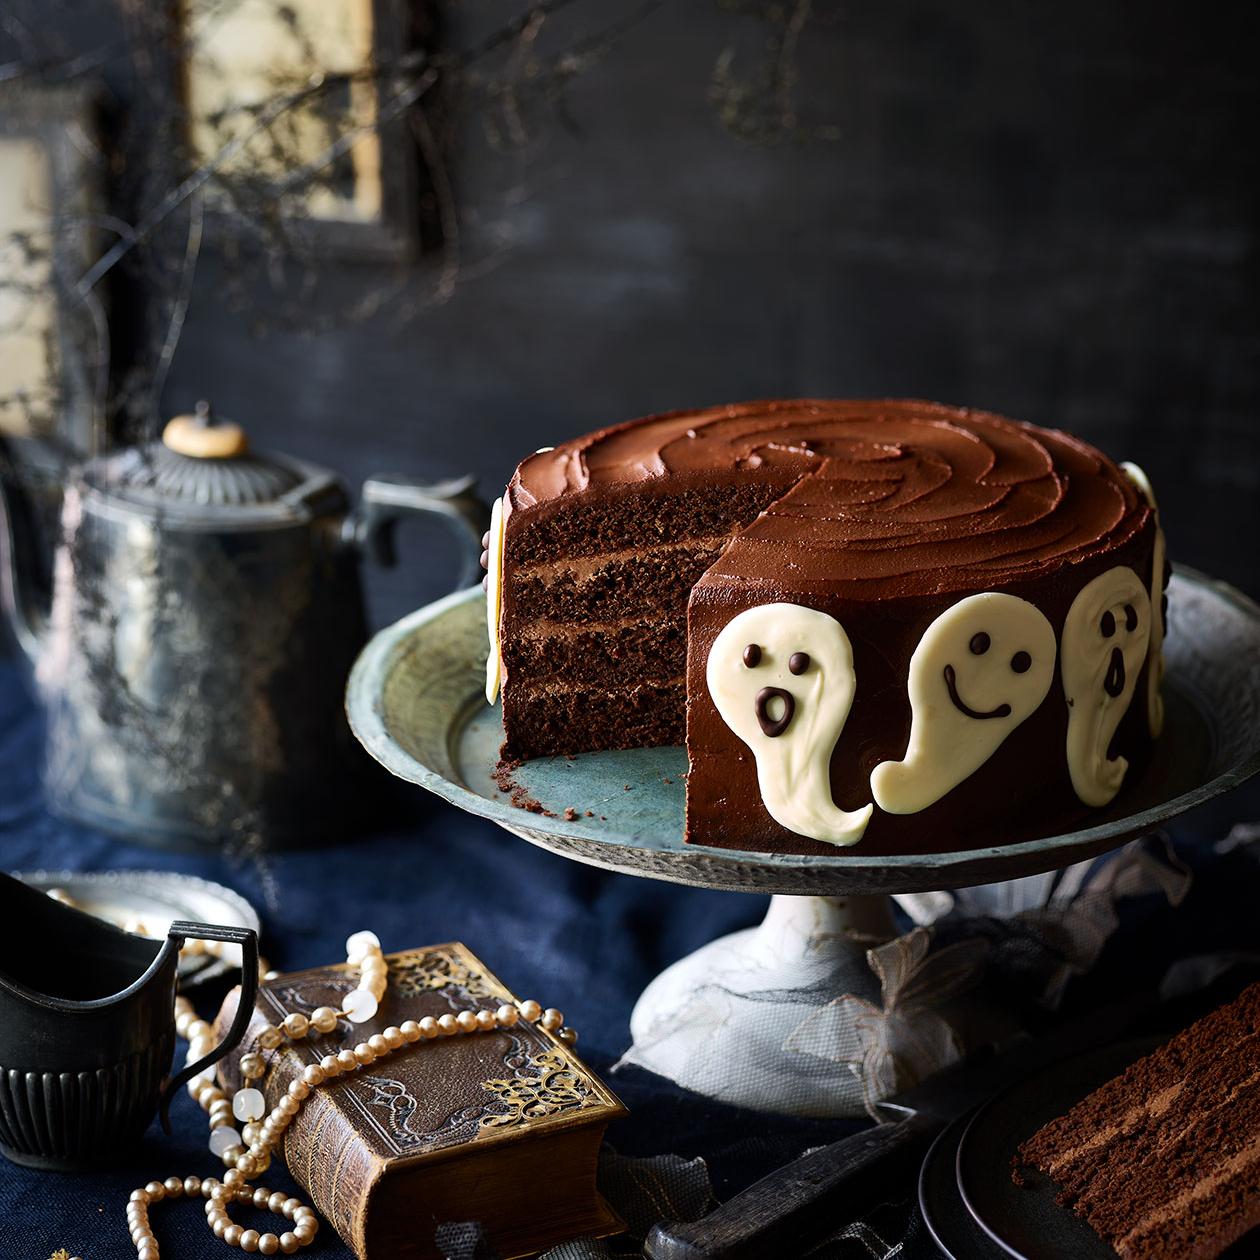 https://www.sainsburysmagazine.co.uk/uploads/media/1800x1800/07/9807-Halloween-chocolate-ghost-cake.jpg?v=1-0